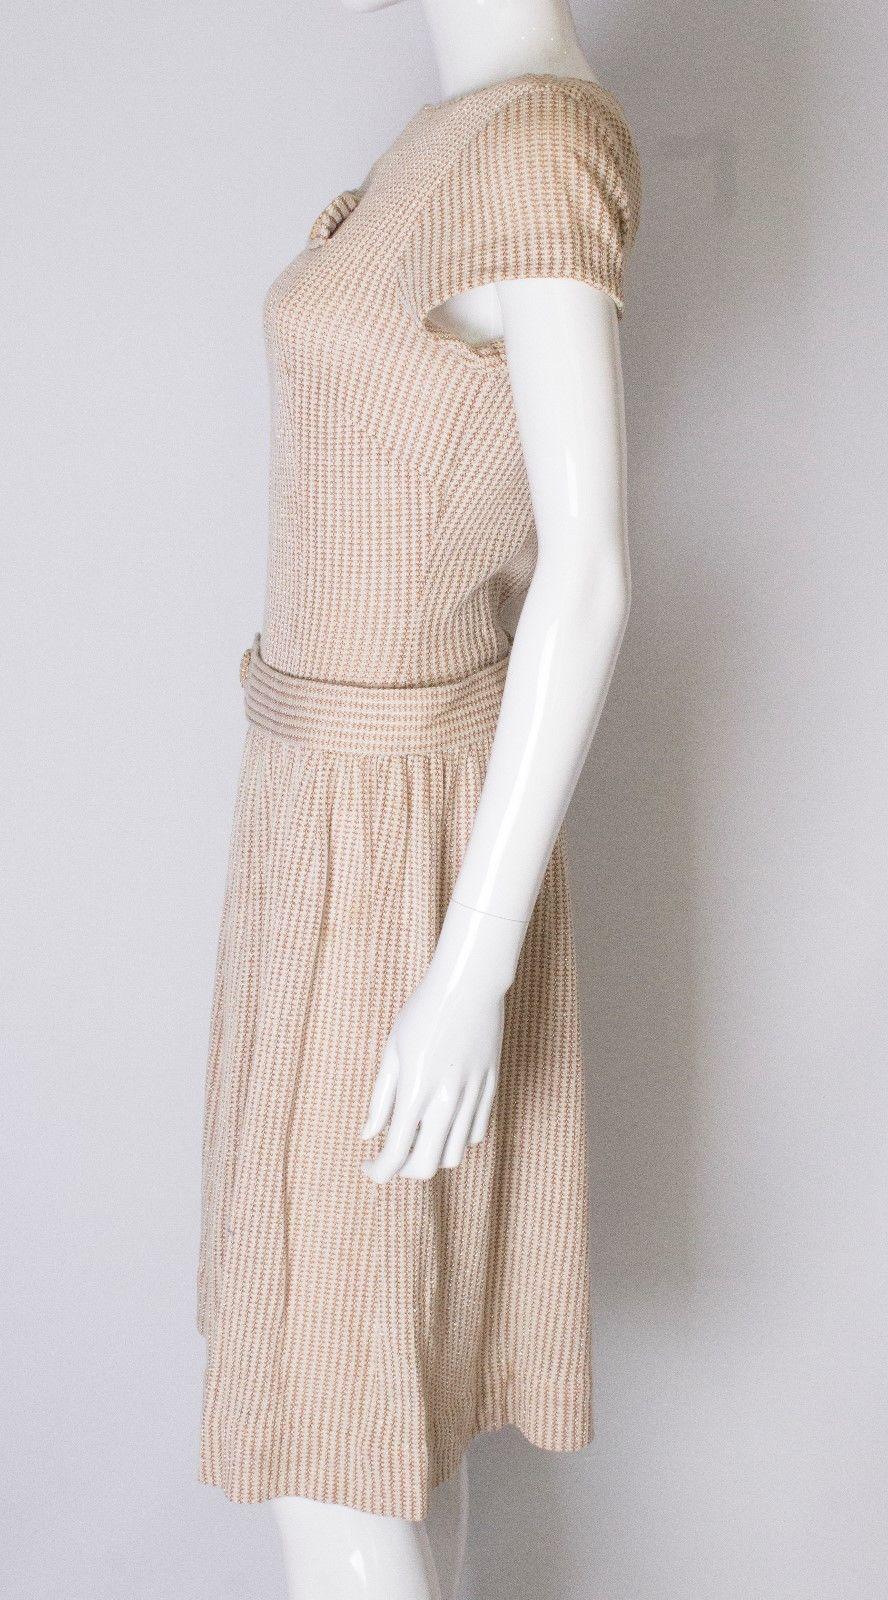 Women's A vintage 1950s cream knitted drop waist glitter thread dress size S Small 